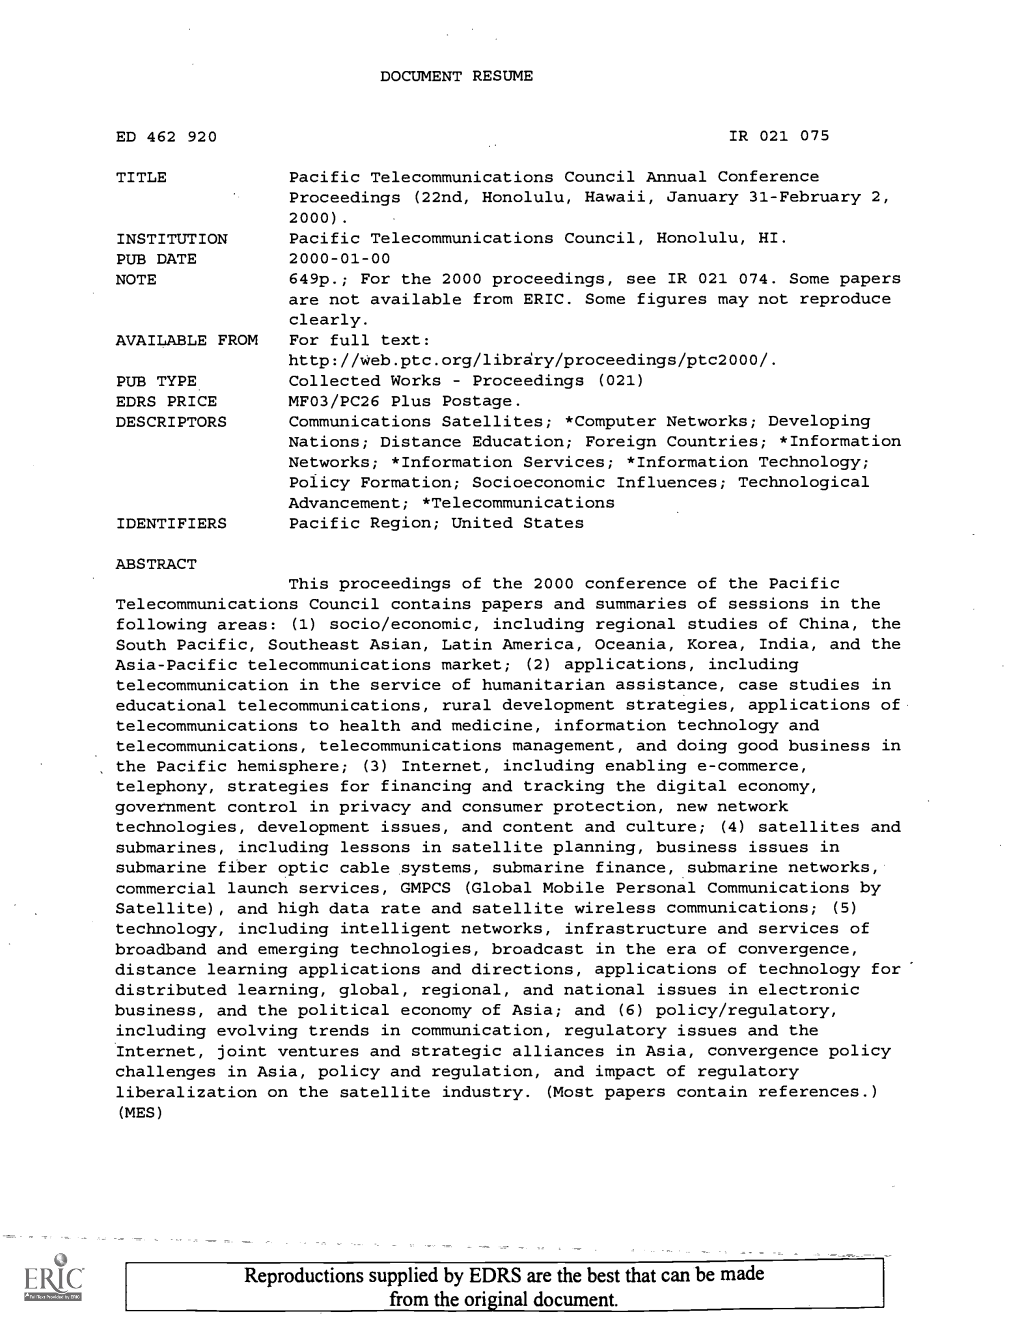 Pacific Telecommunications Council Annual Conference Proceedings (22Nd, Honolulu, Hawaii, January 31-February 2, 2000)